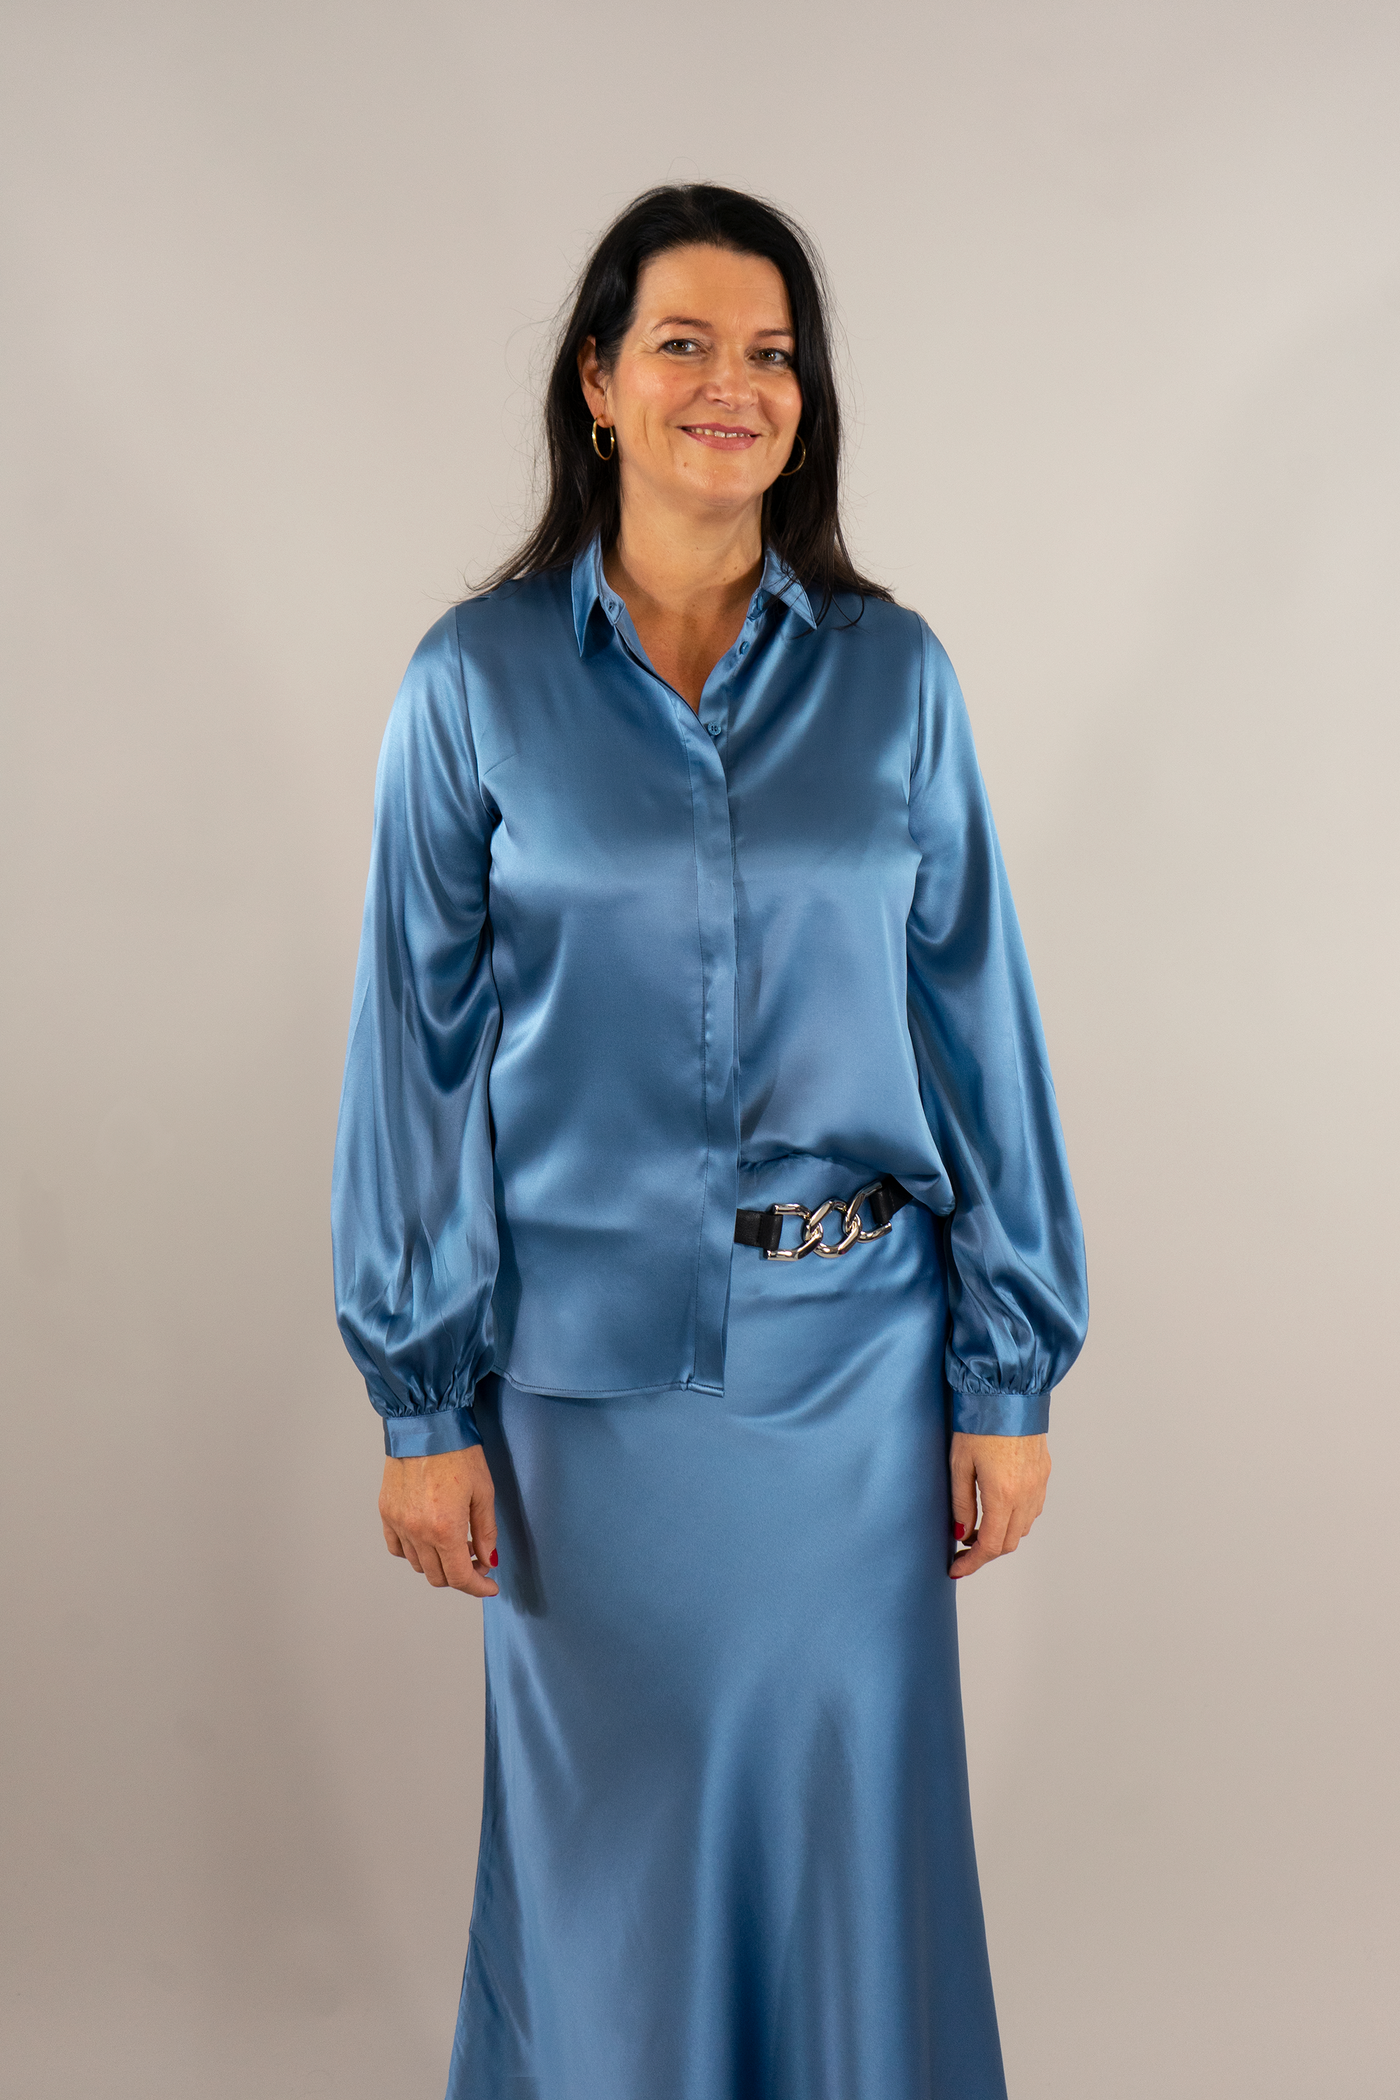 Charlotte Sparre Seidenbluse Simple Shirt Solid Blue